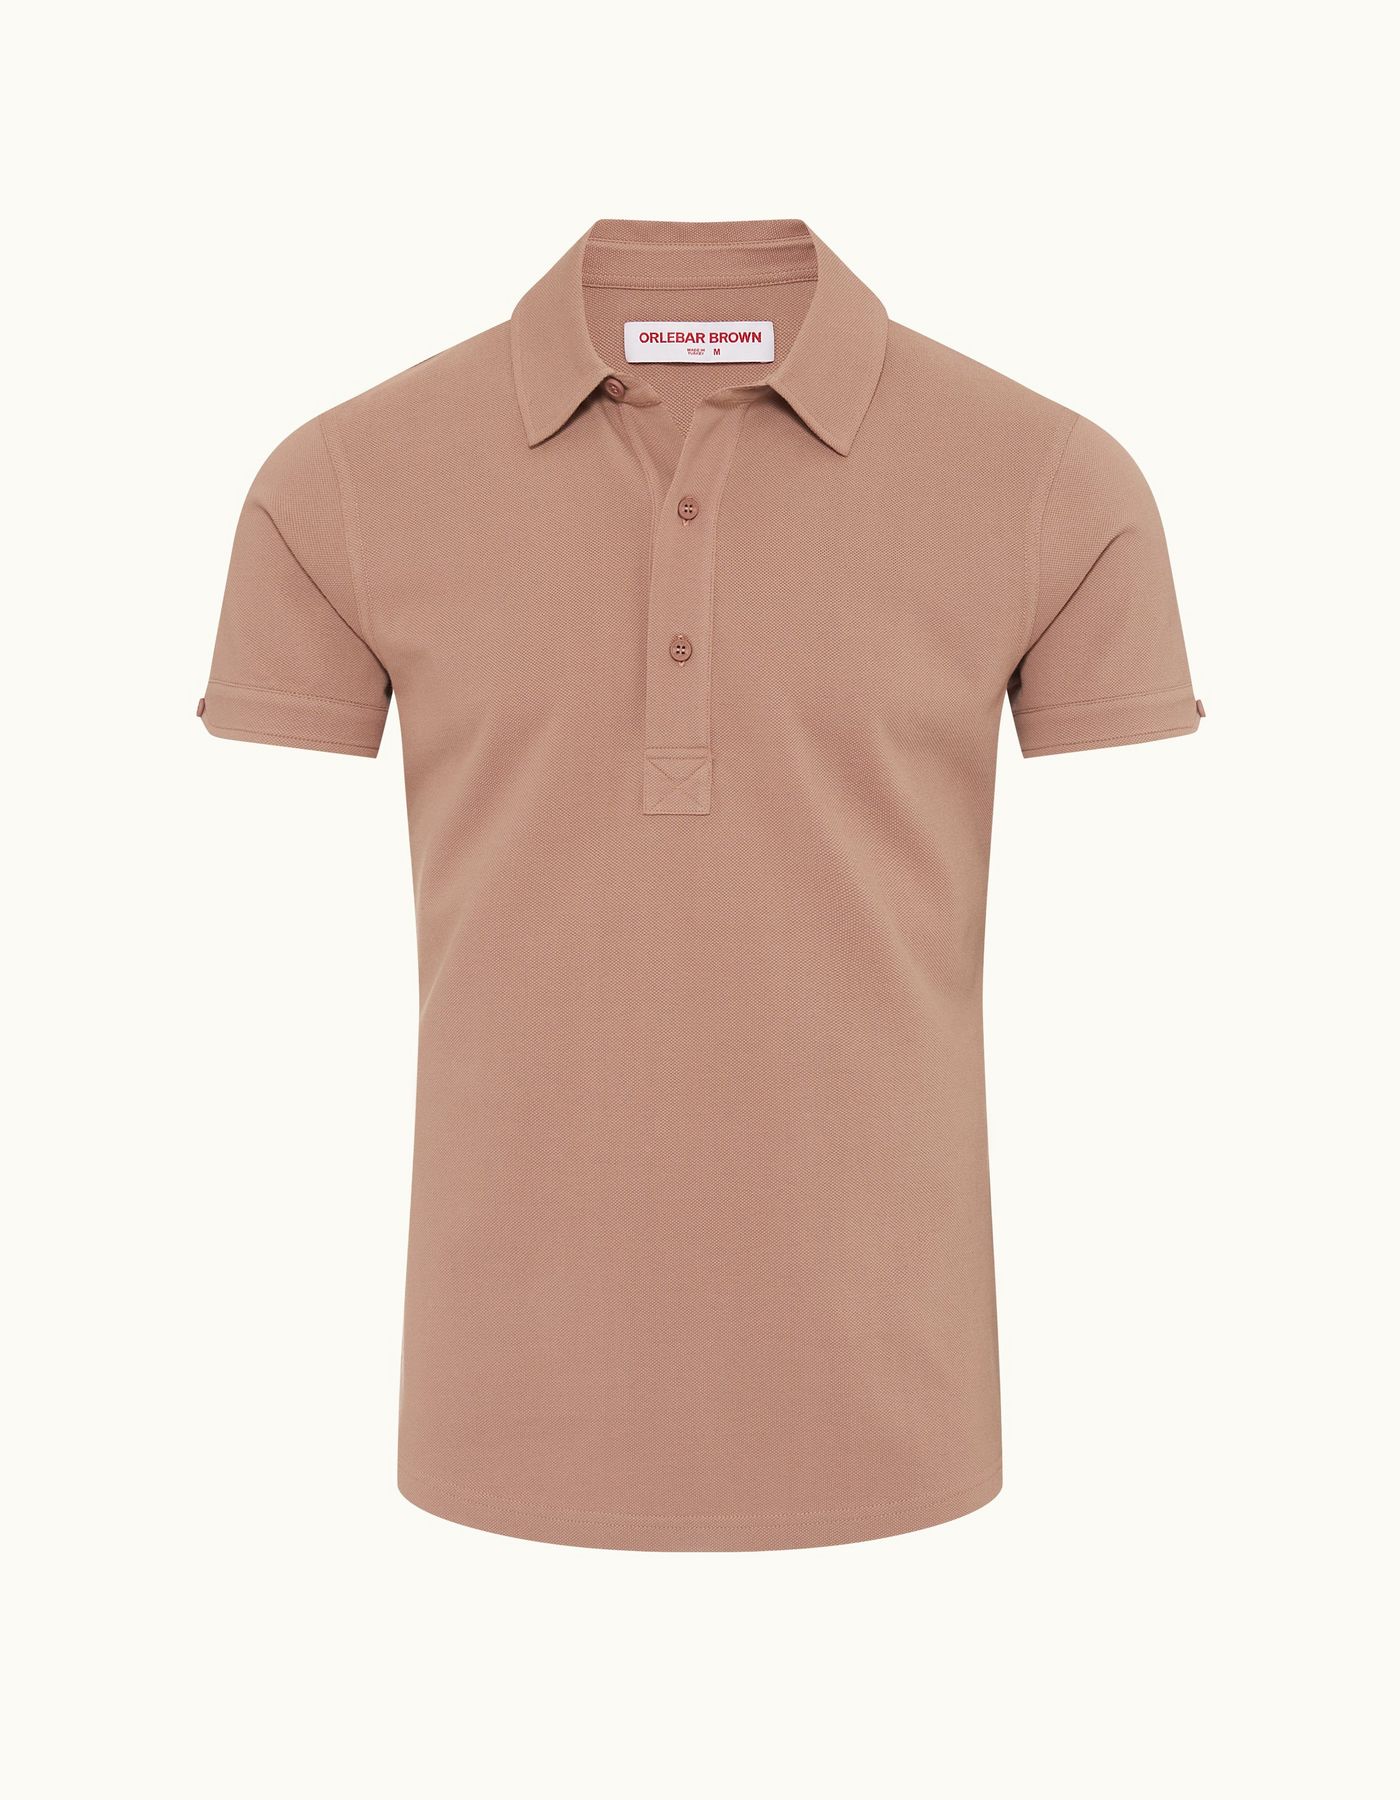 Sebastian - Mens Caramel Pink Tailored Fit Cotton Polo Shirt